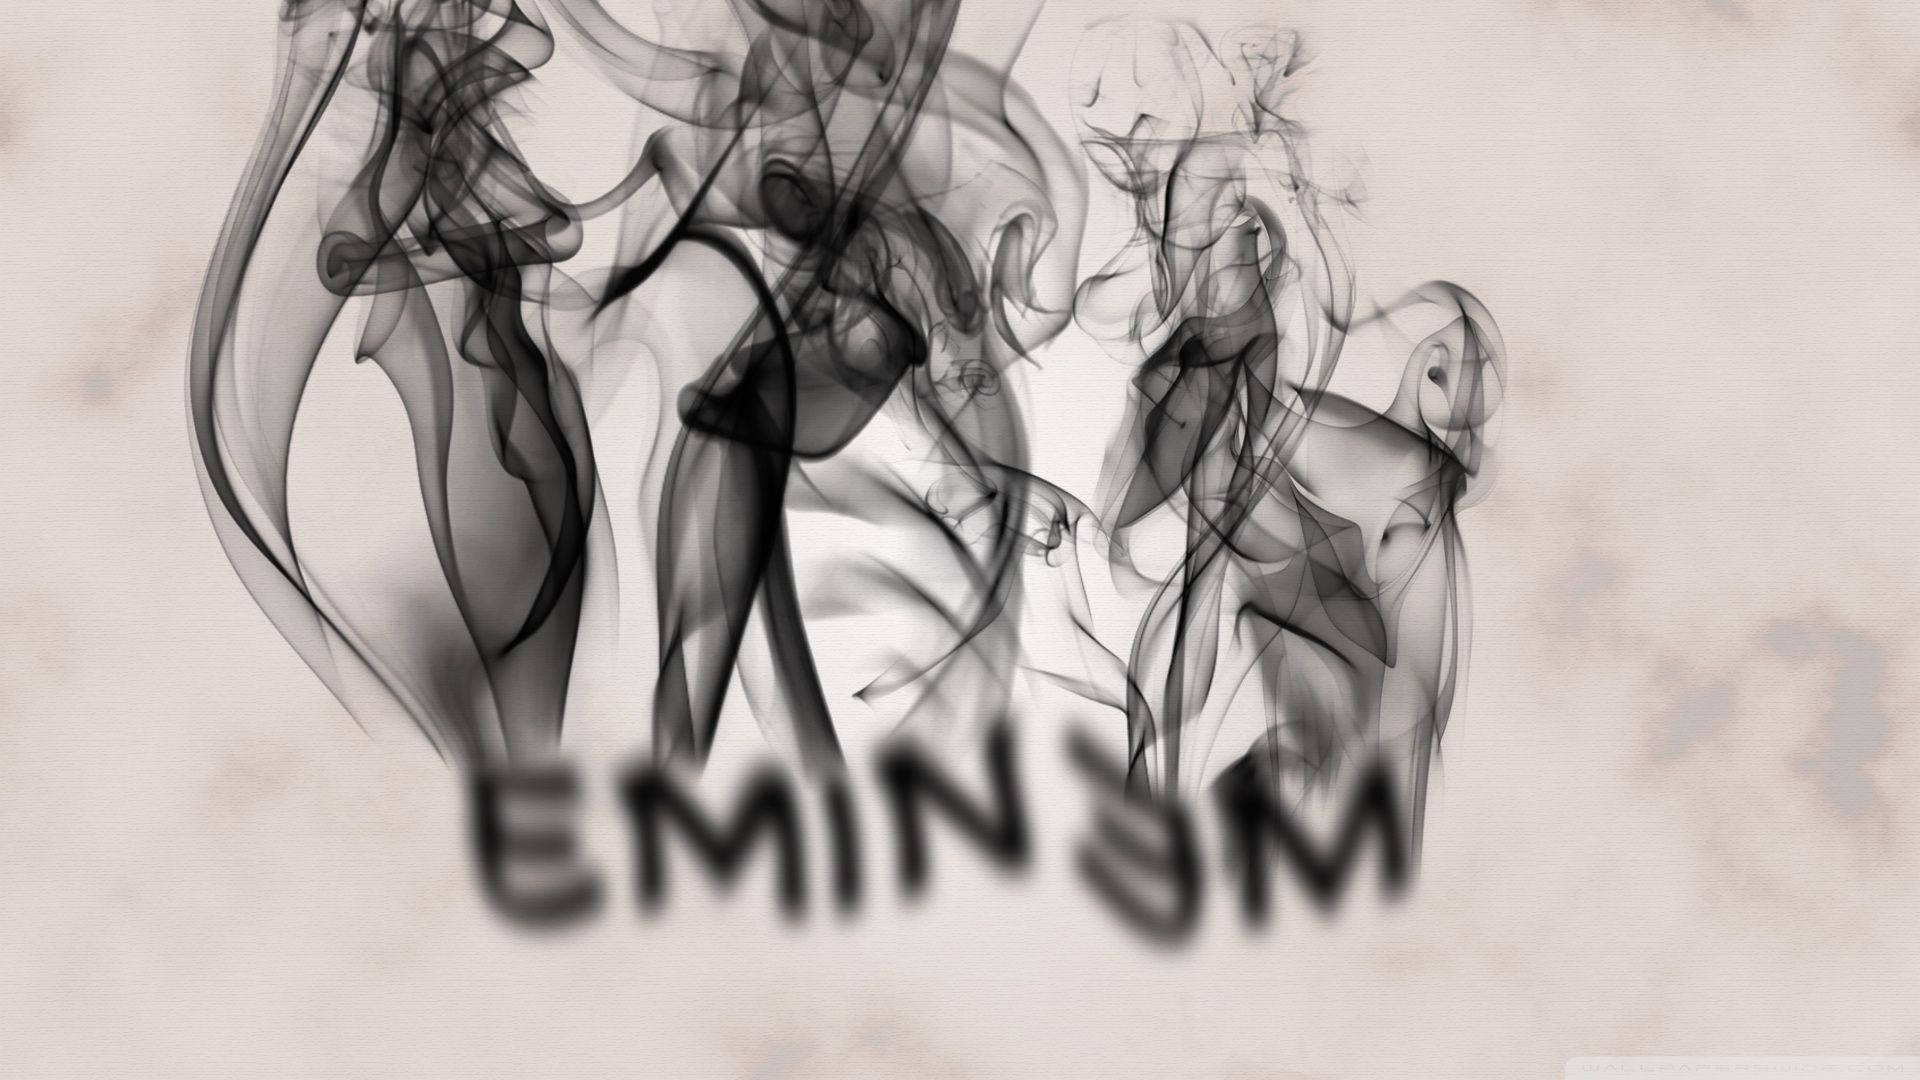 The Smoking Name Of Eminem